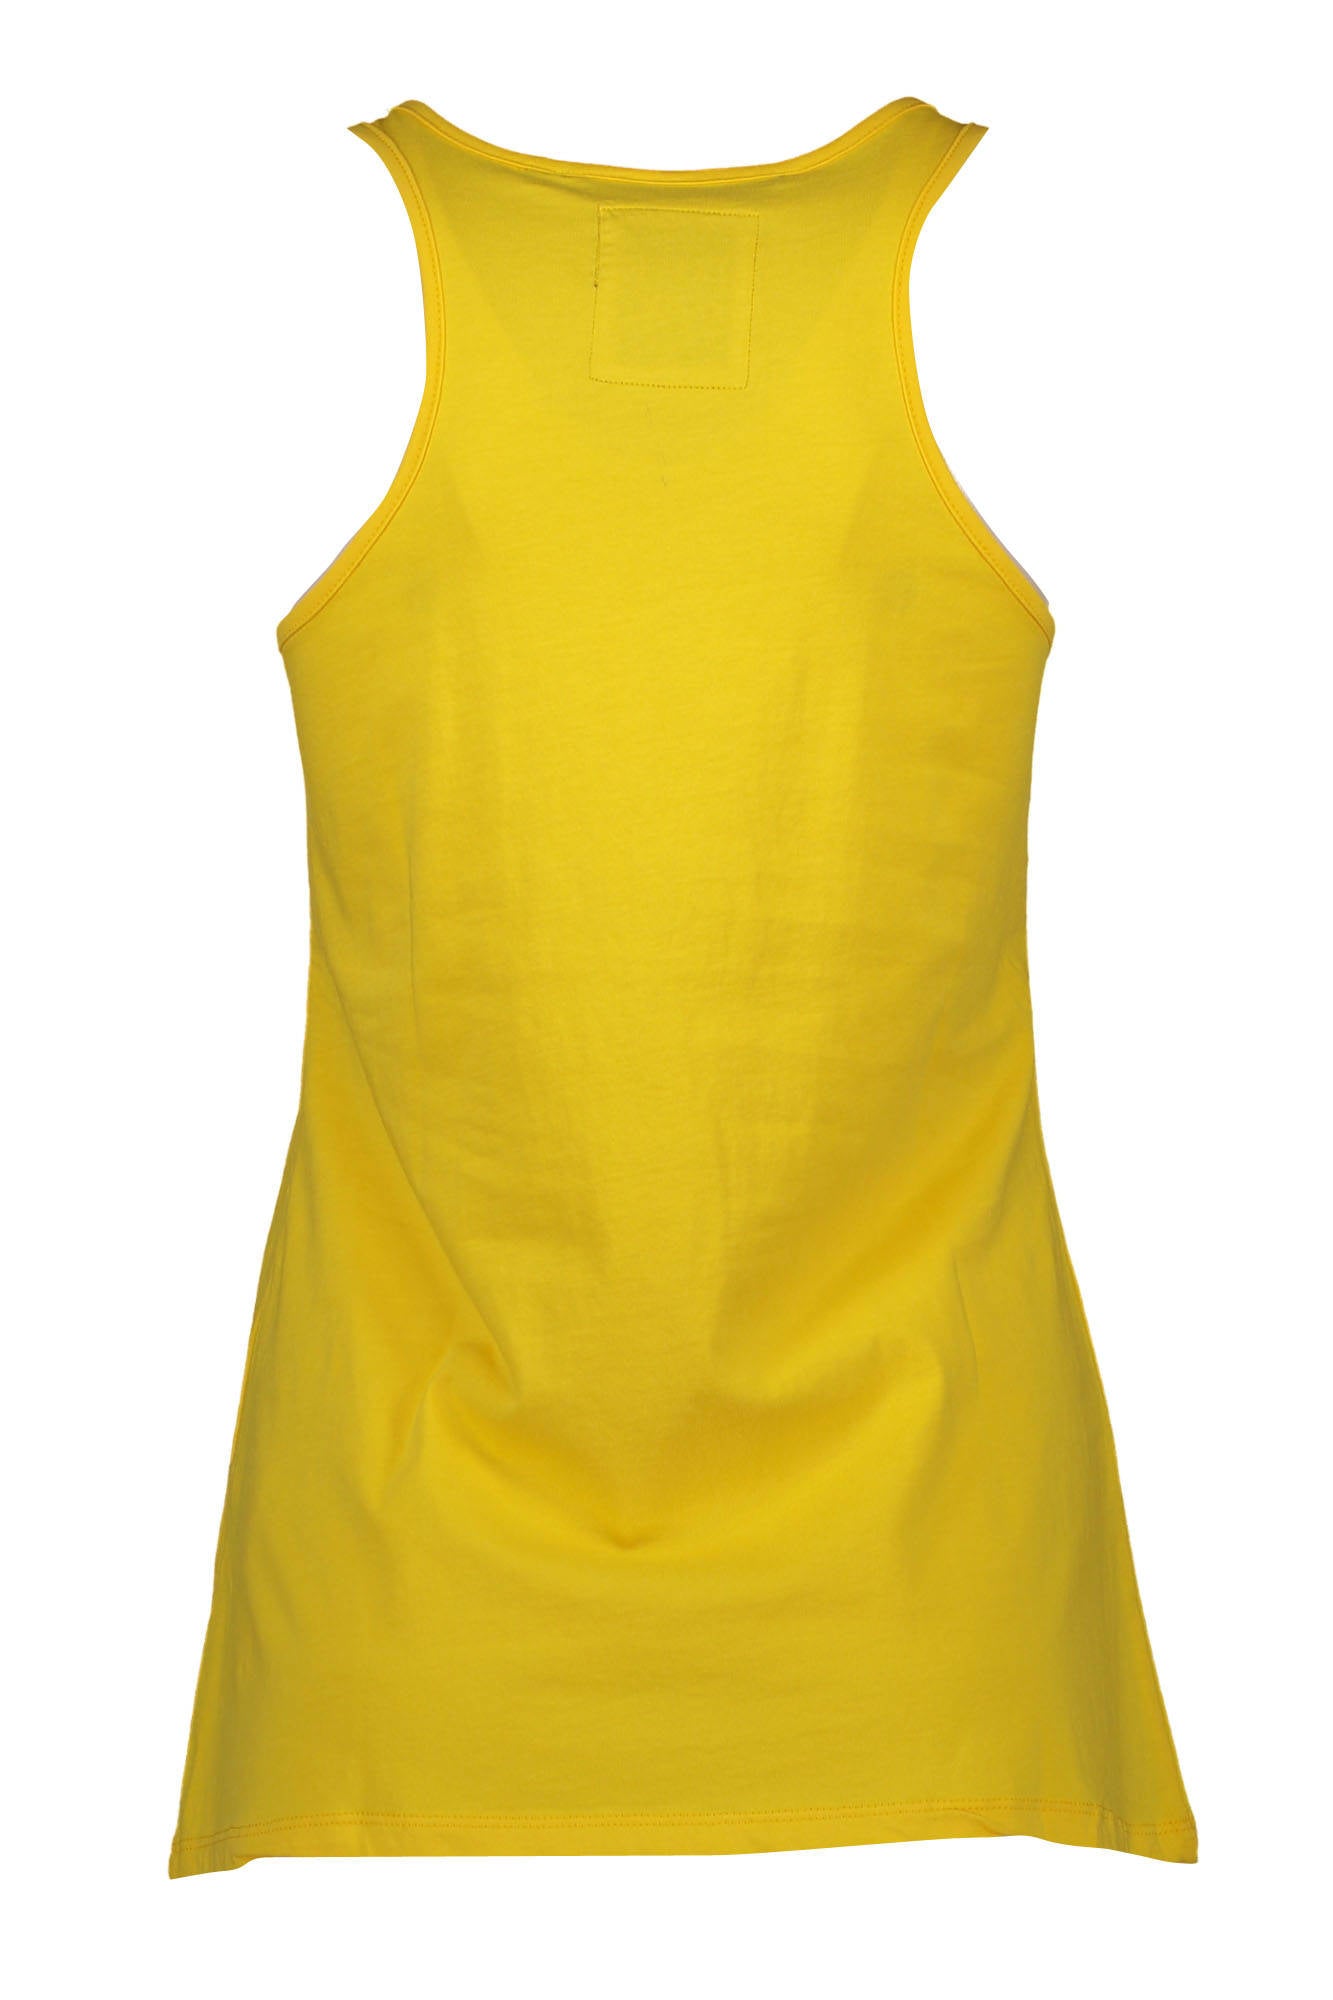 Silvian Heach Yellow Tops & T-Shirt - Fizigo